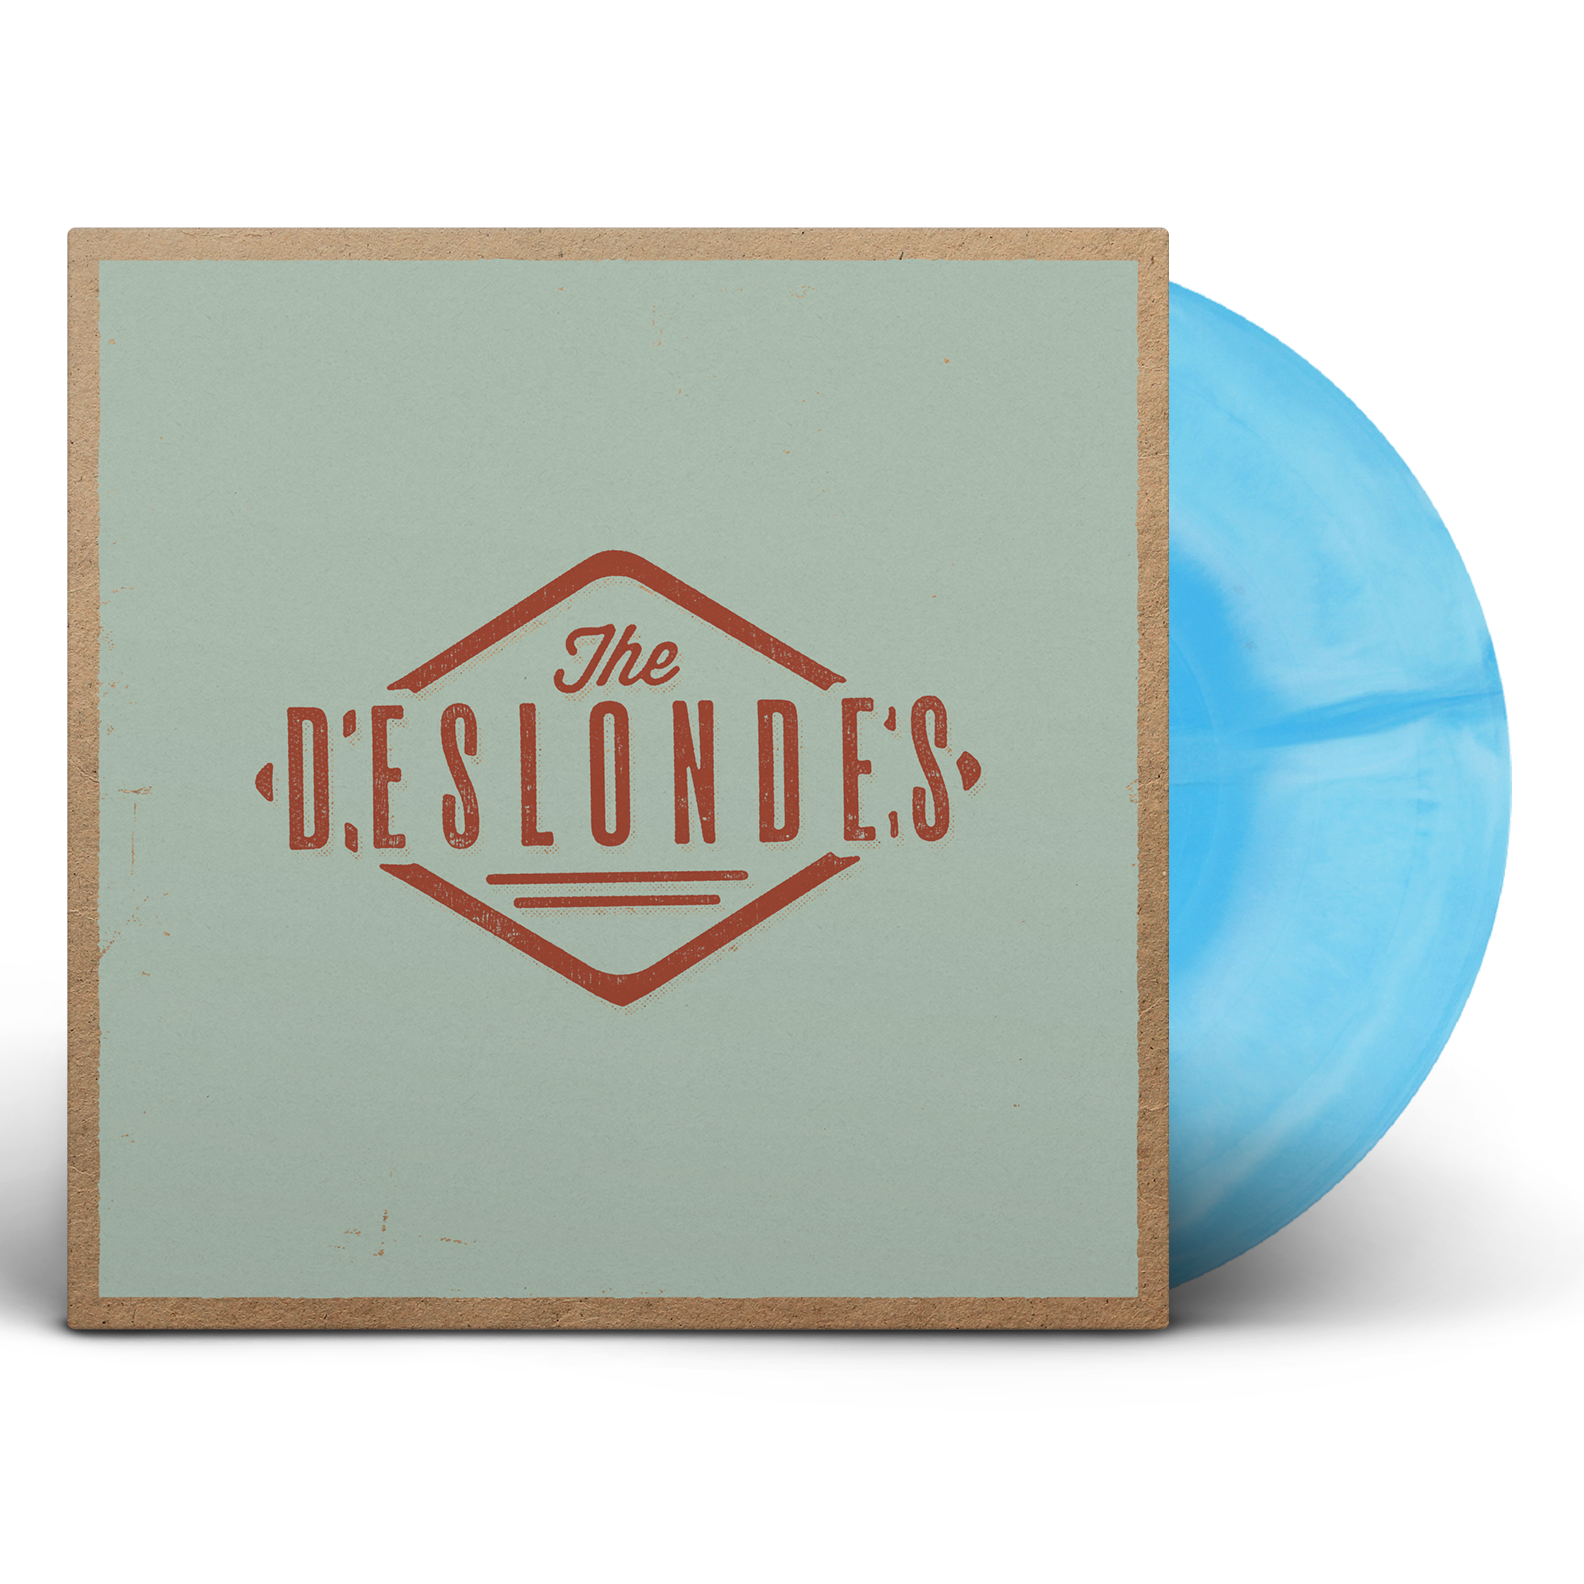 The Deslondes - The Deslondes [Limited Edition Color Vinyl]